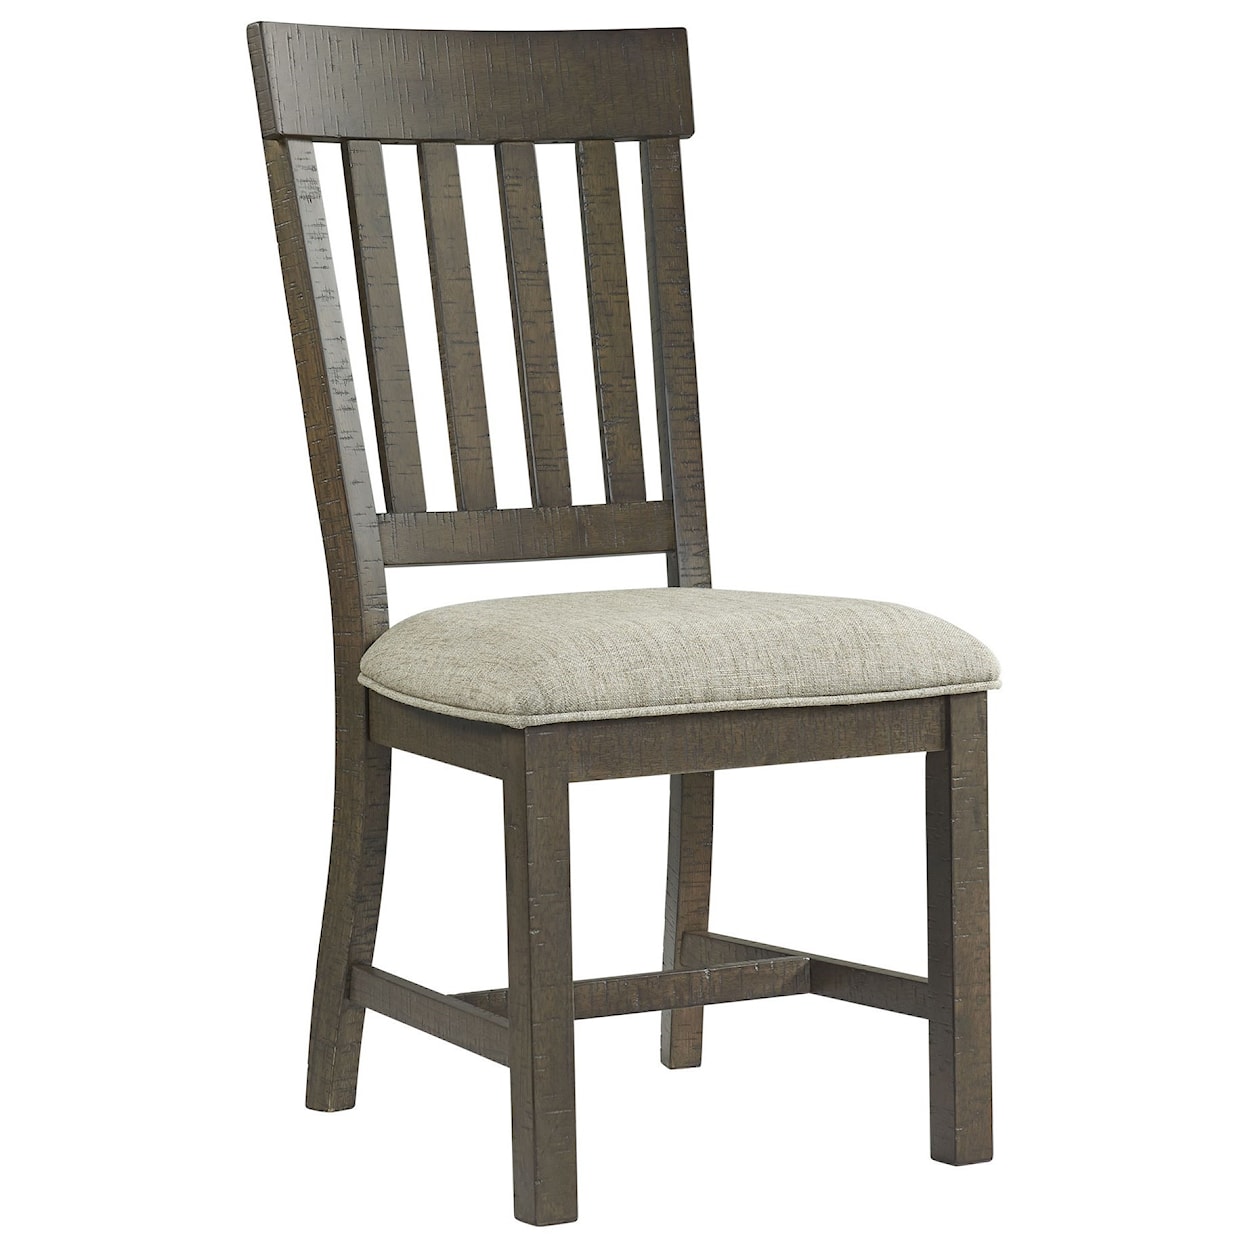 Intercon Sullivan Table and Chair Set